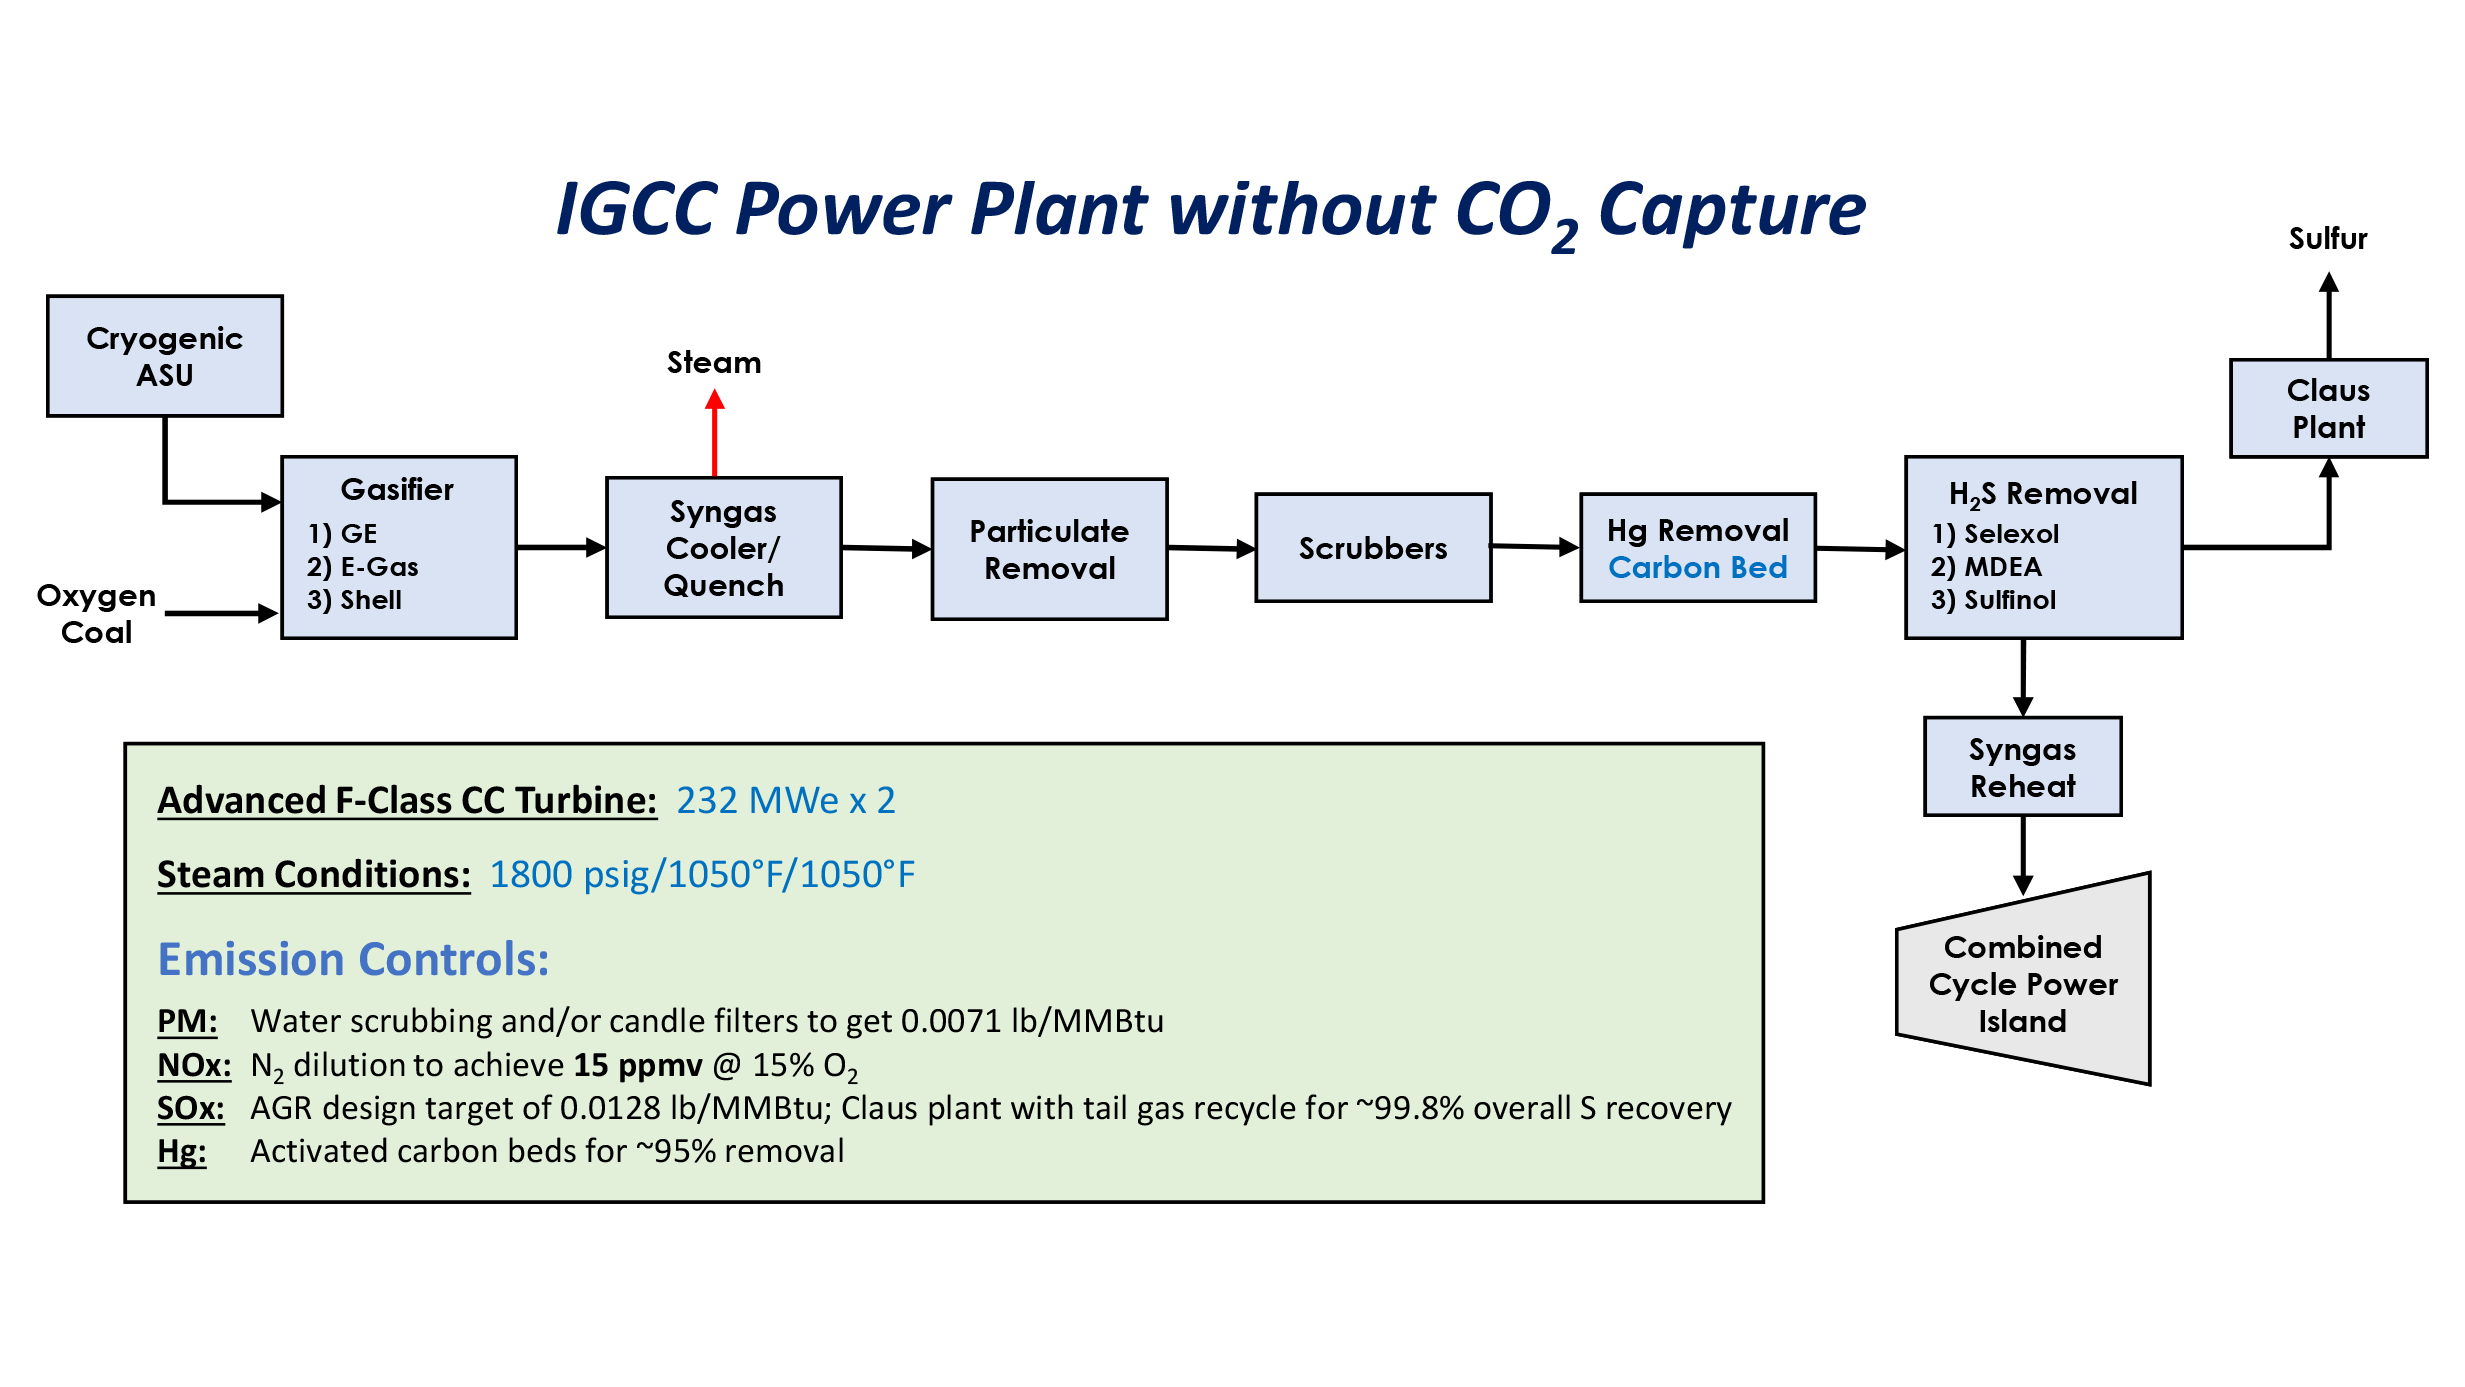 Figure 1. IGCC Power Plant Without CO2 Capture